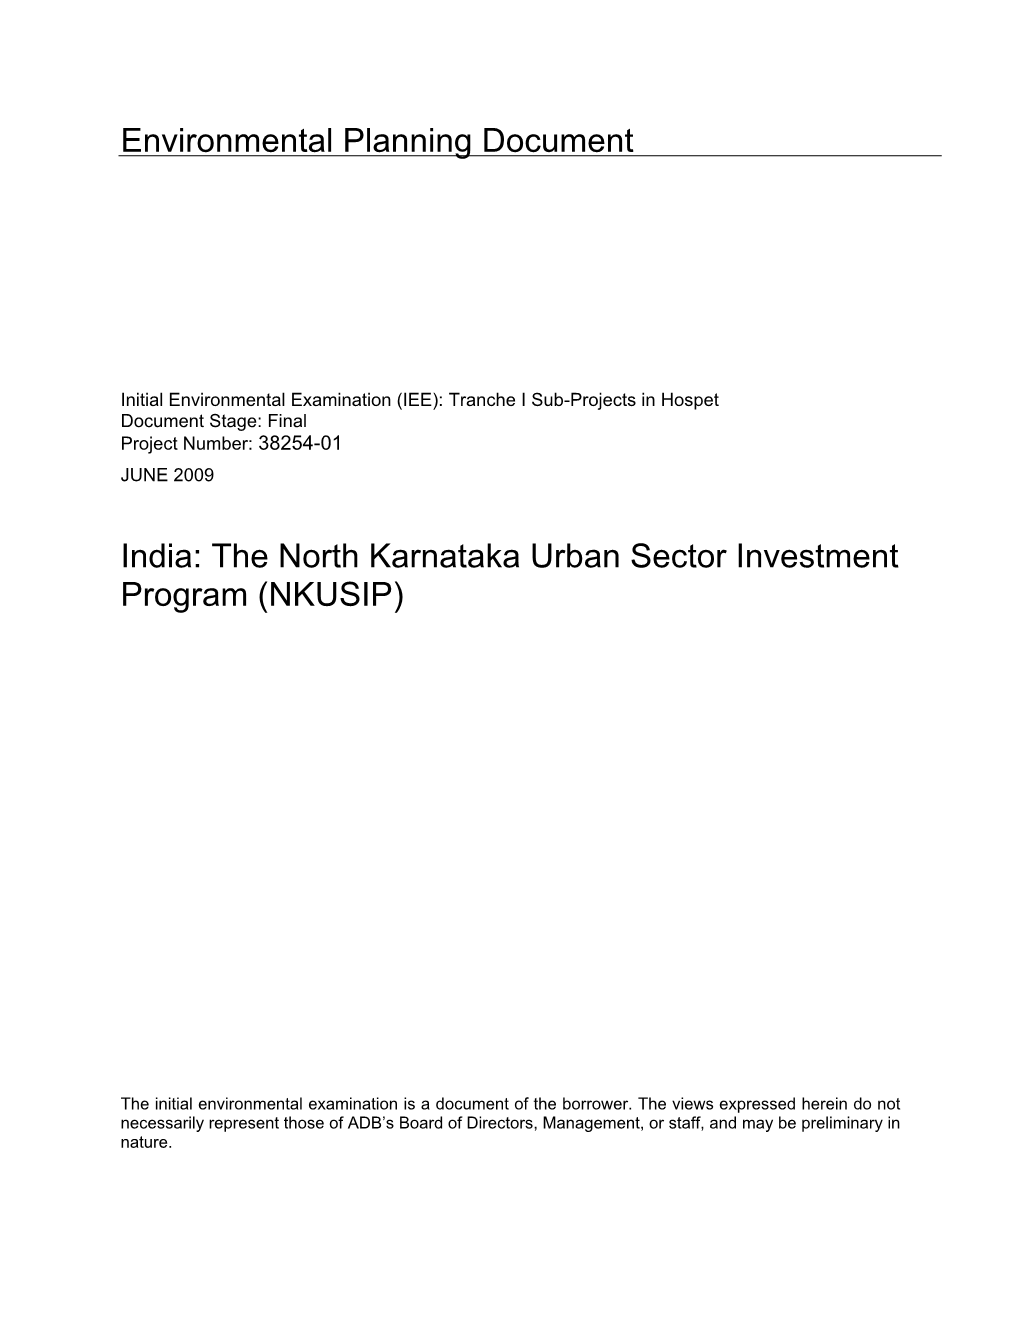 IEE: India: Hospet Town, North Karnataka Urban Sector Investment Program